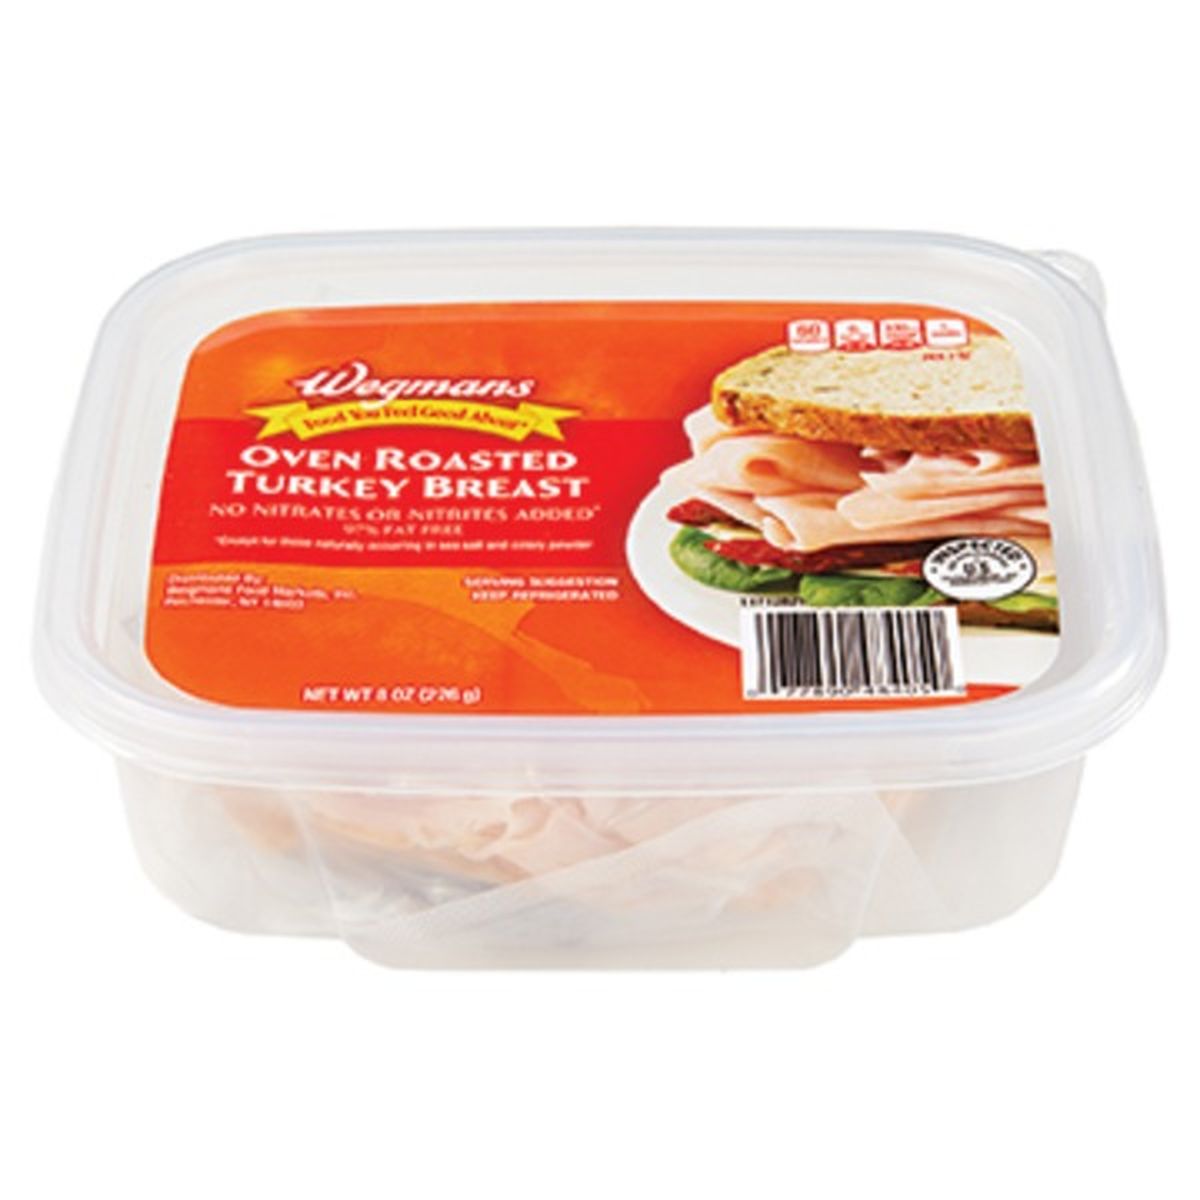 Calories in Wegmans Oven Roasted Turkey Breast